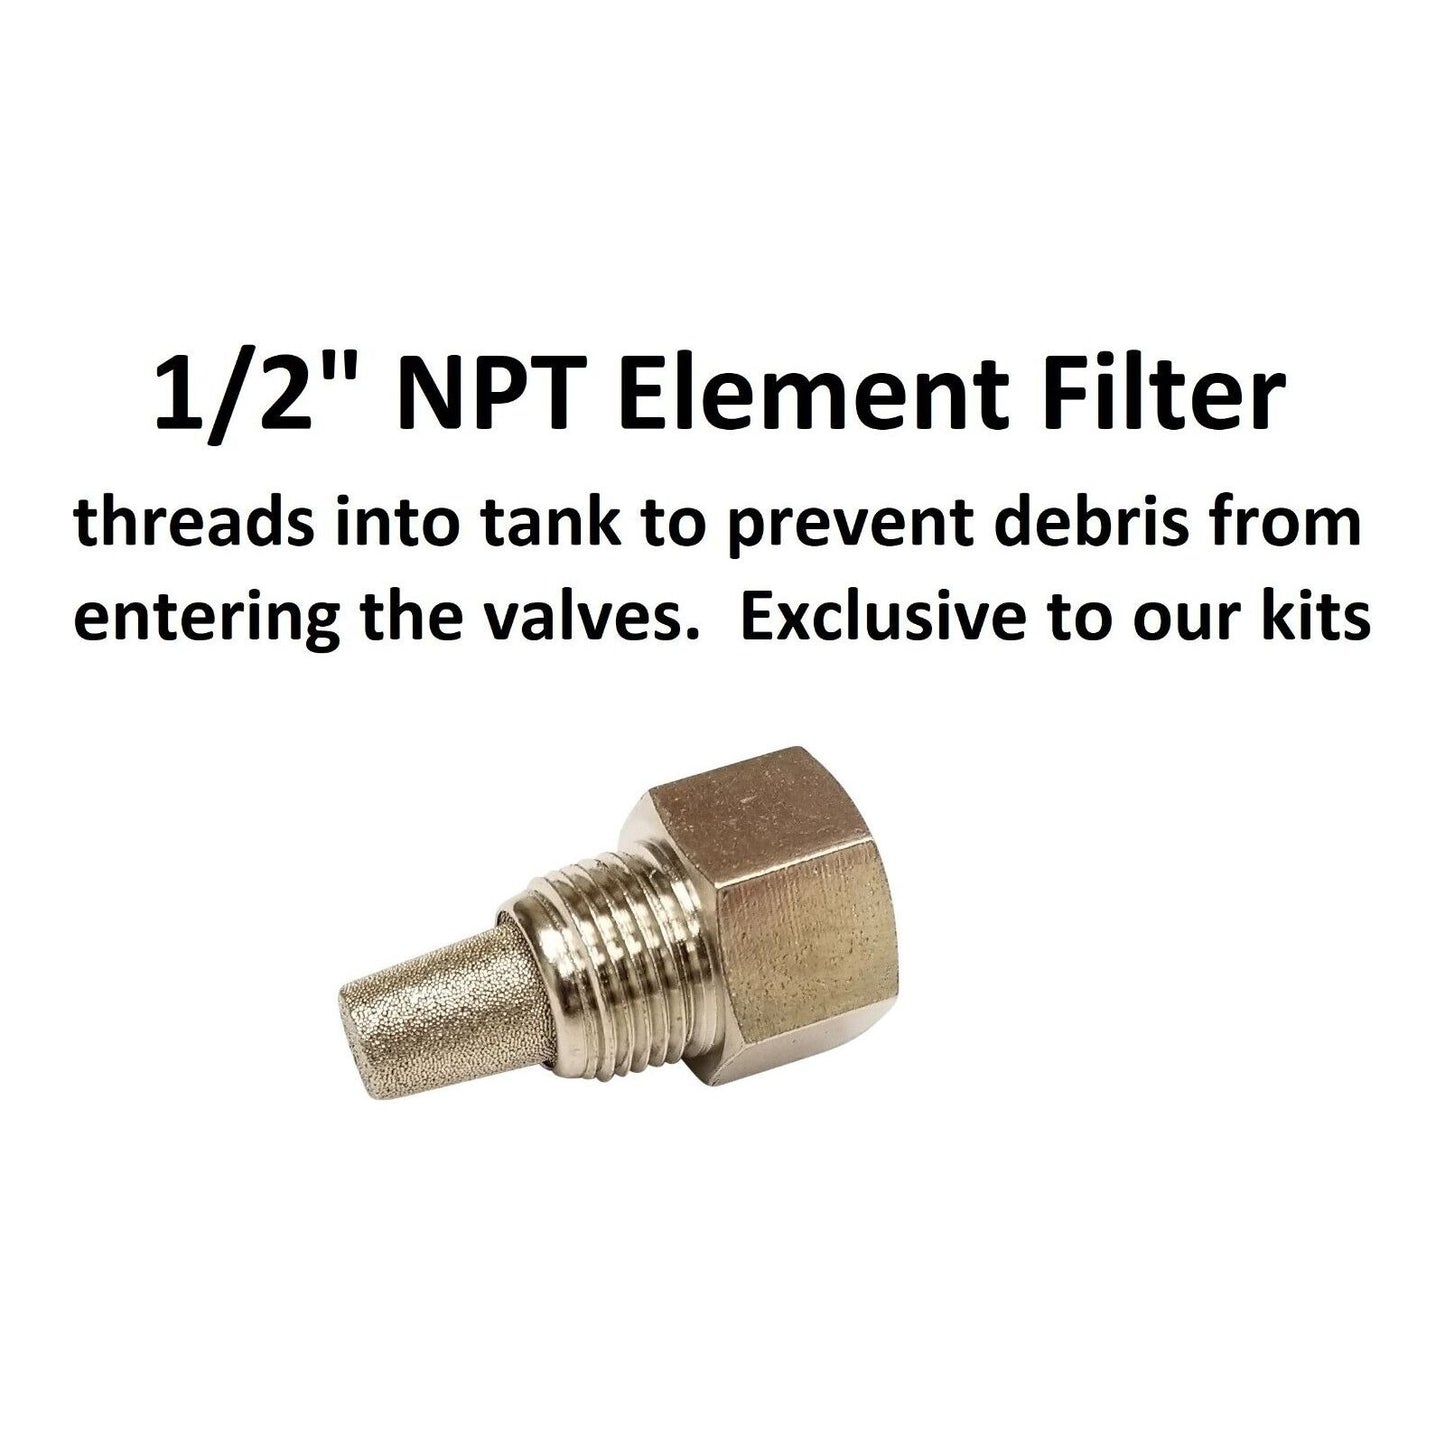 1/2 NPT element filter